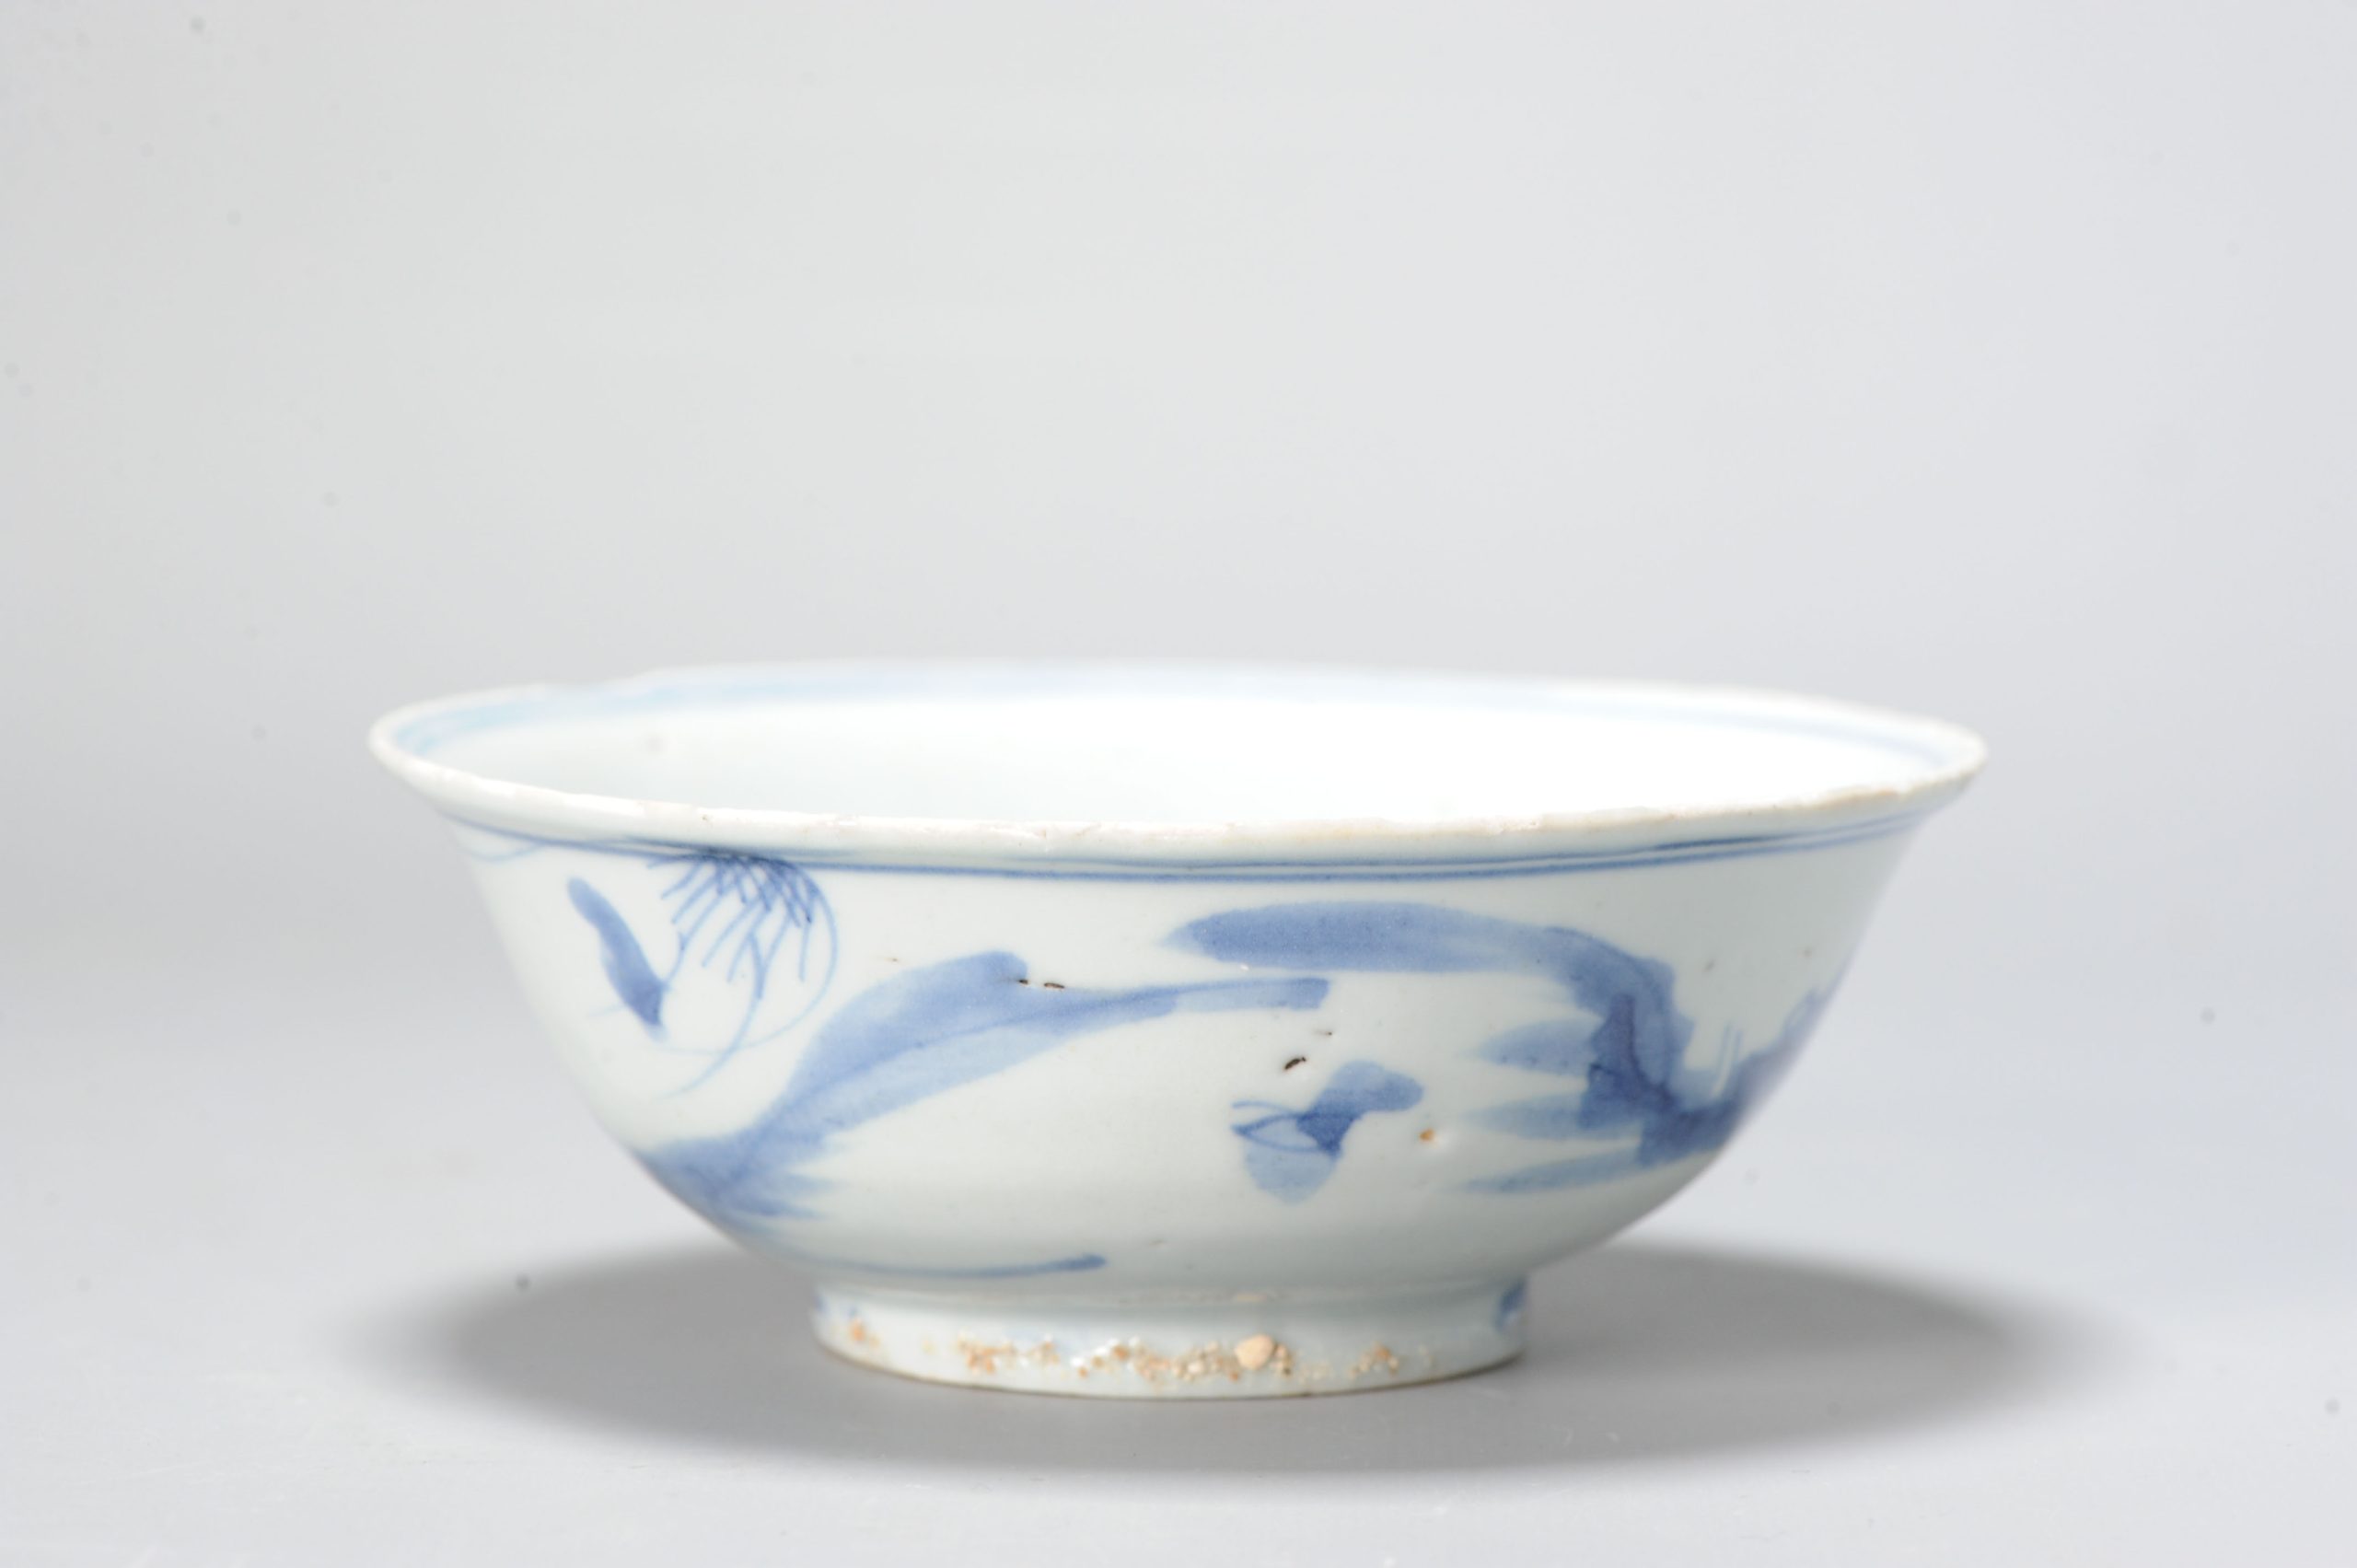 Rare Ca 1600-1640 Chinese Porcelain Ming Period Kosometsuke bowl